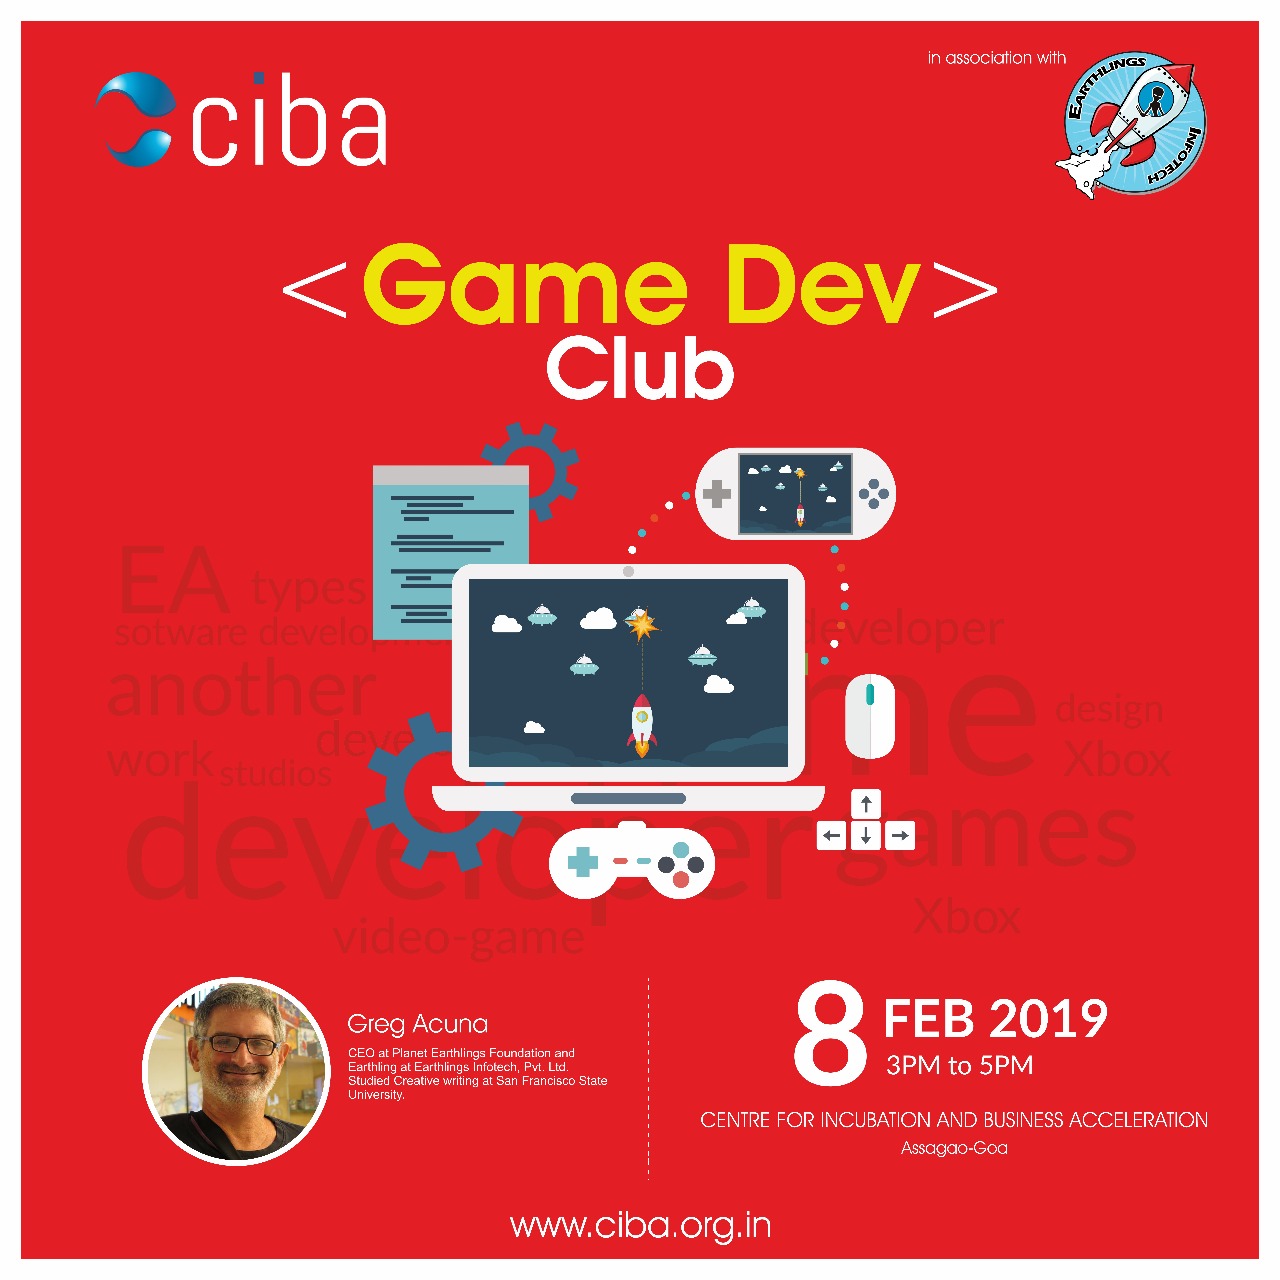 ciba-Game Developers Club